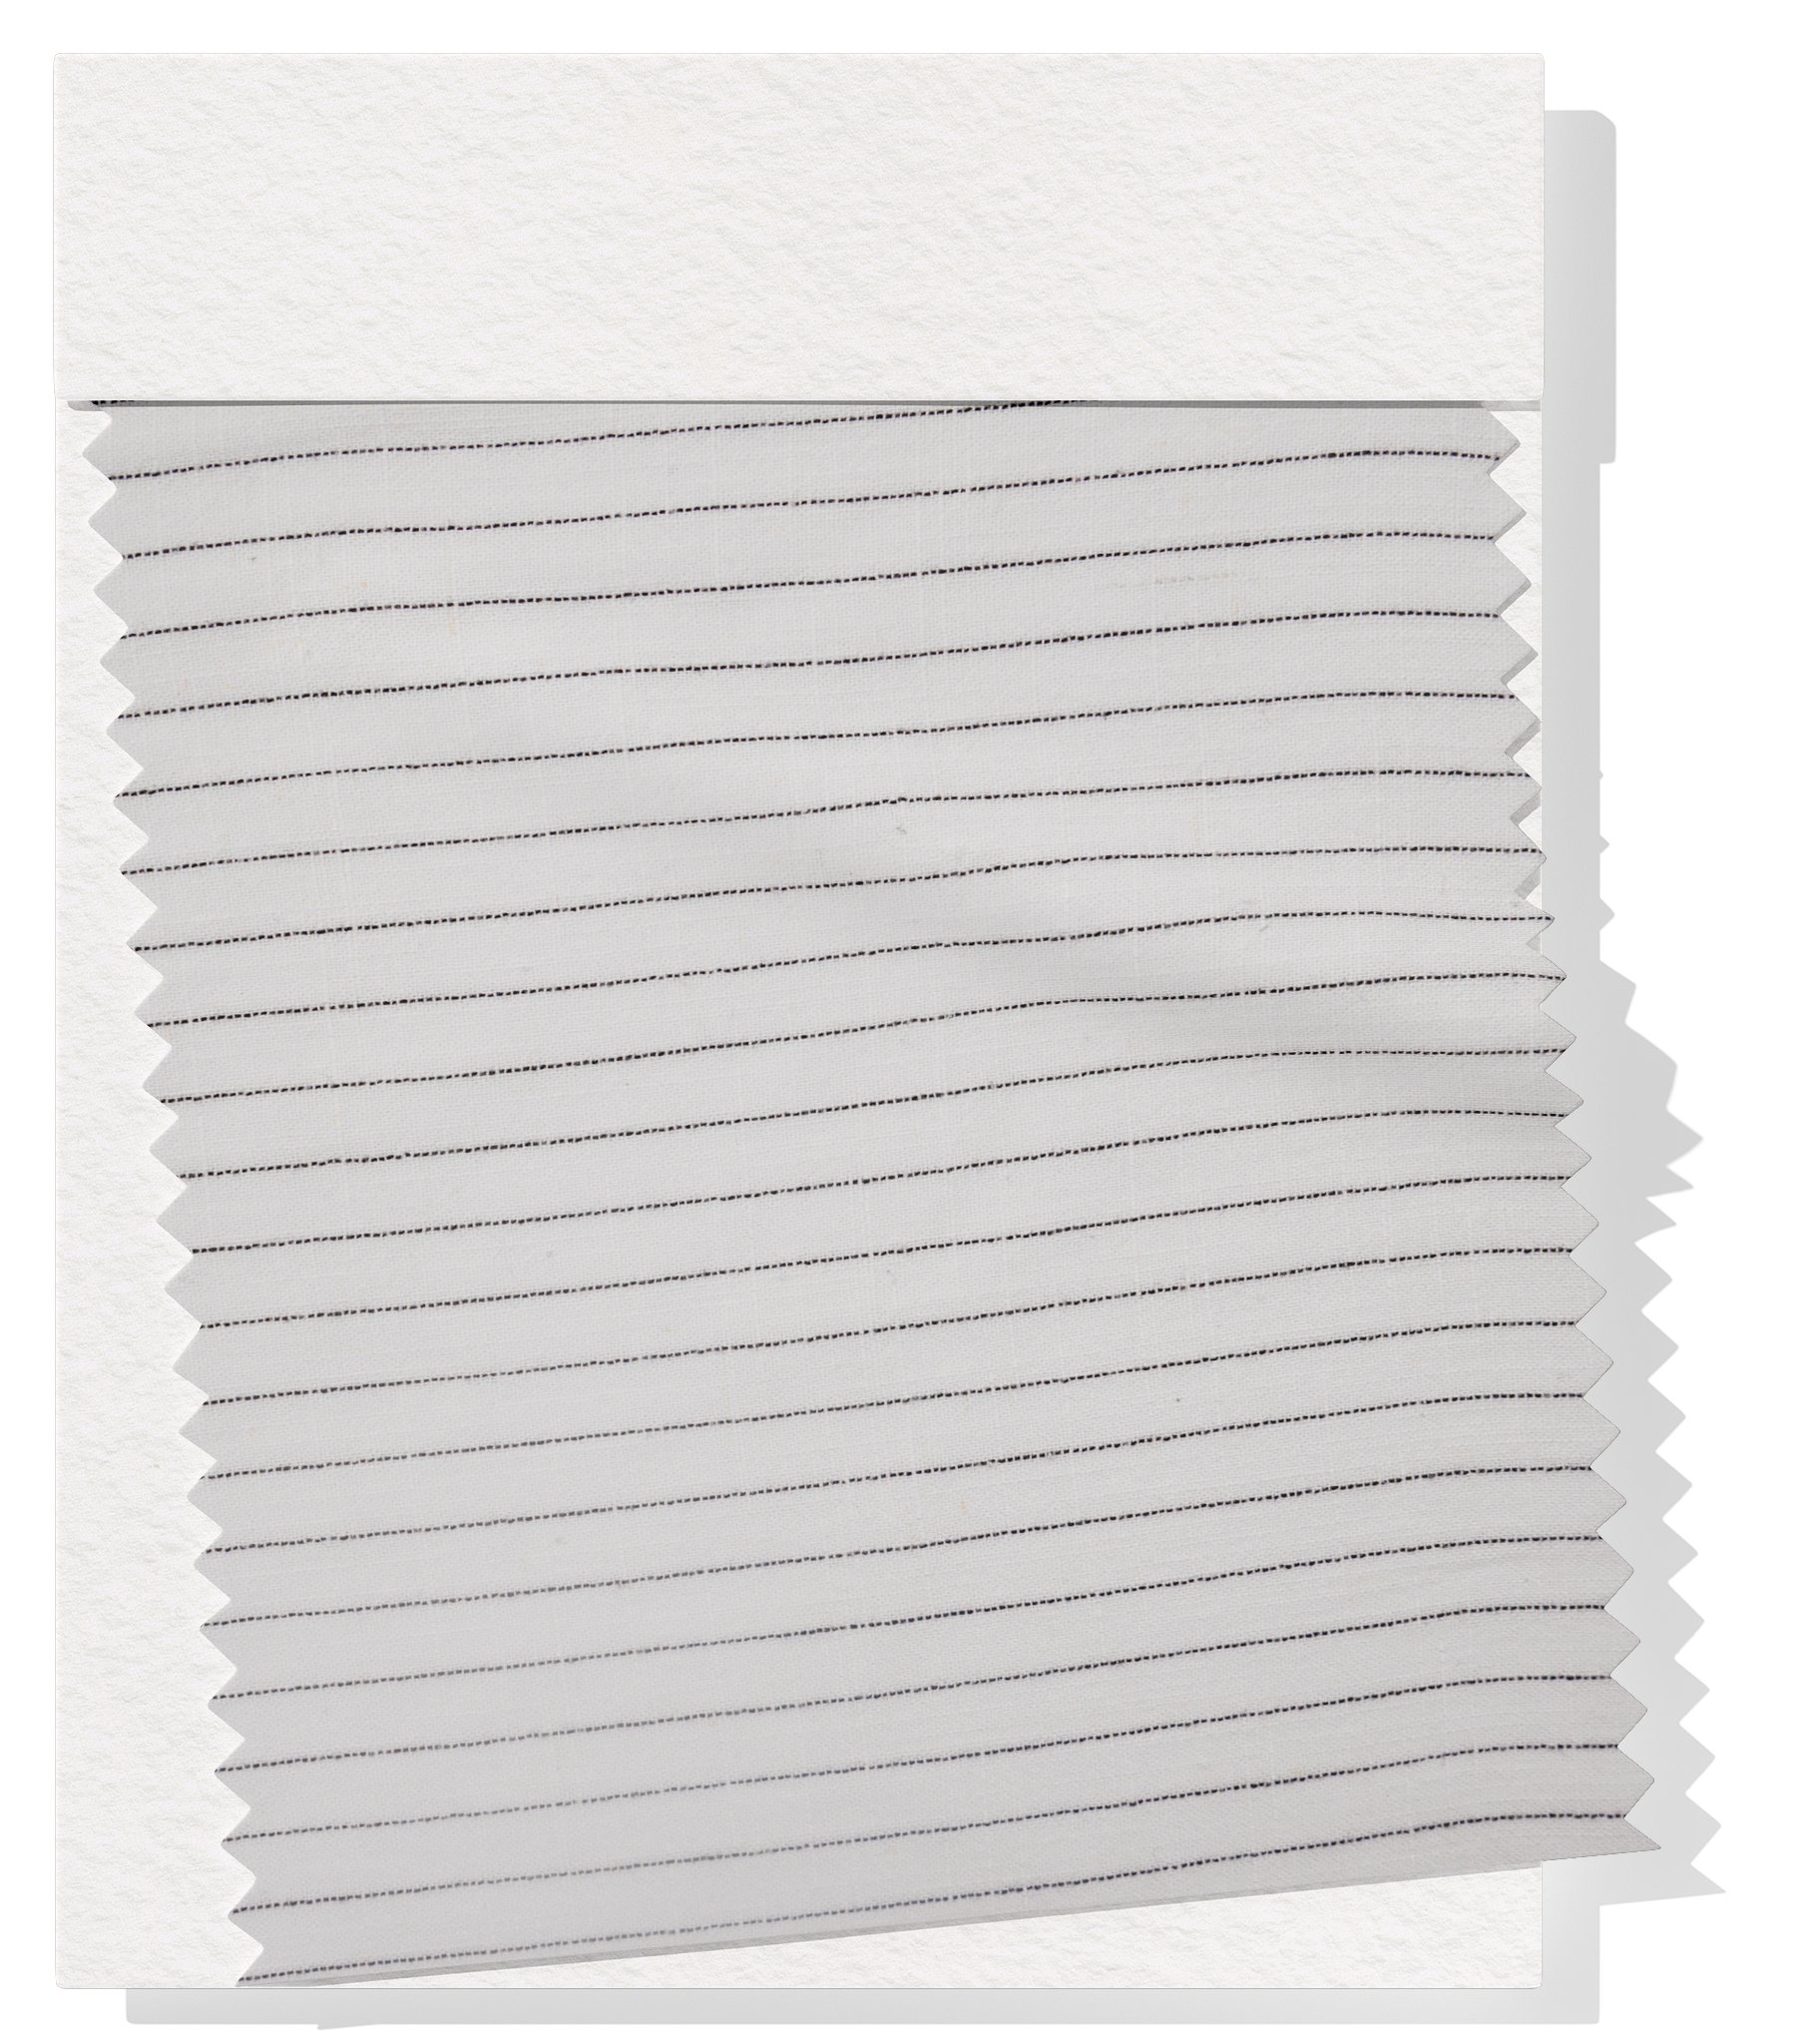 Striped Linen / Ramie $18.00p/m - White with Black Stripes